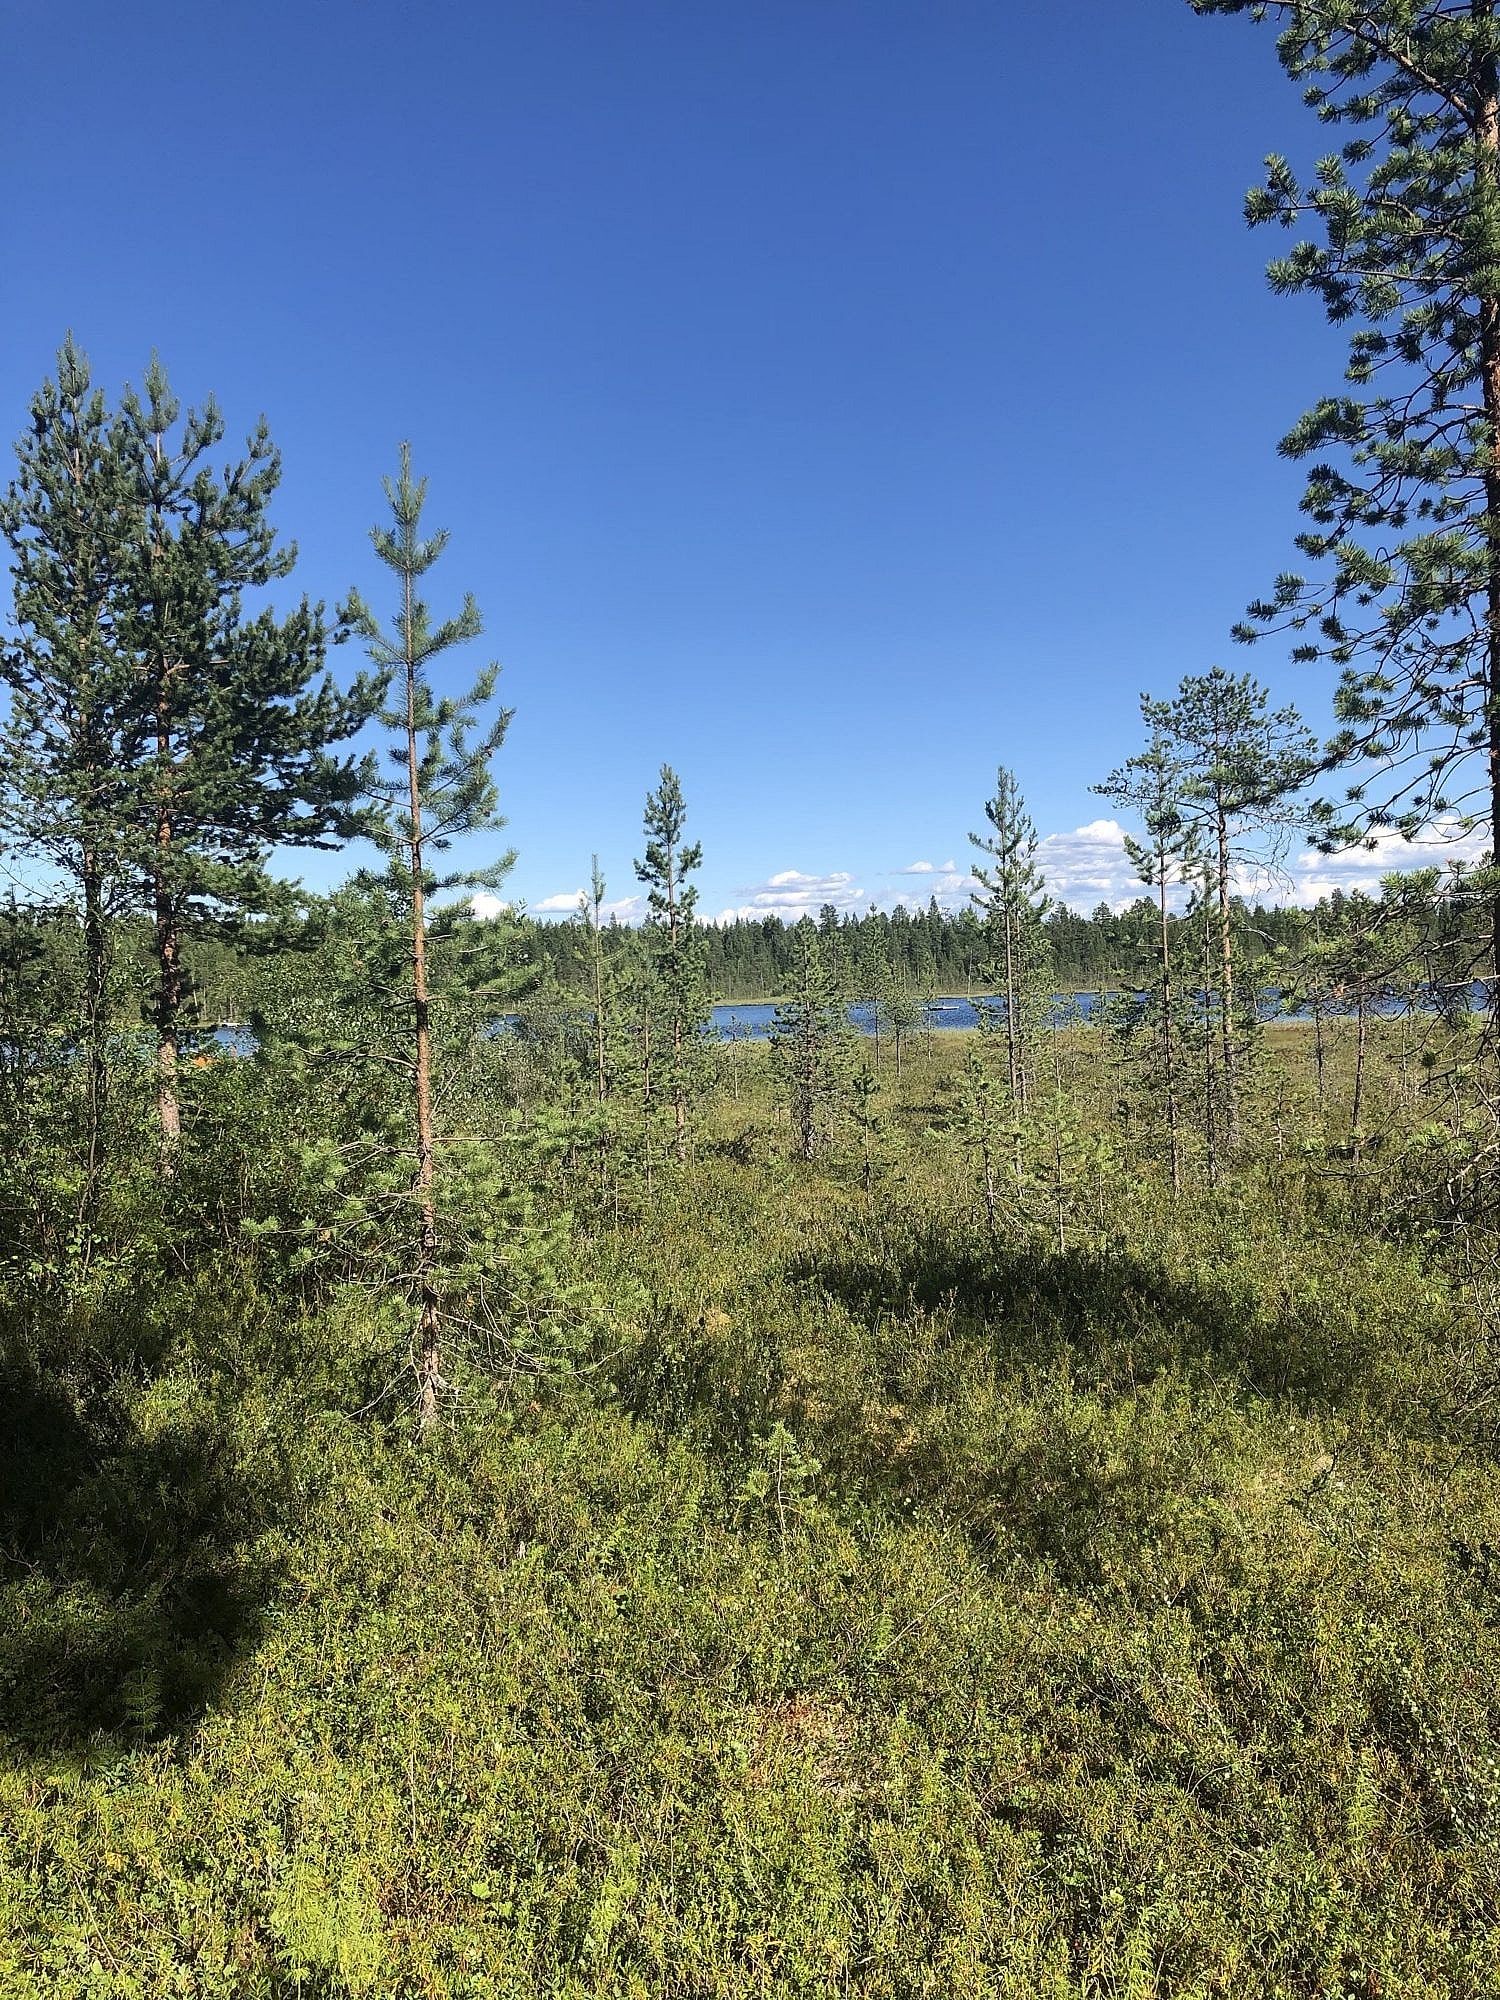 Huskyfarm in Finnland: Nomadic Naali